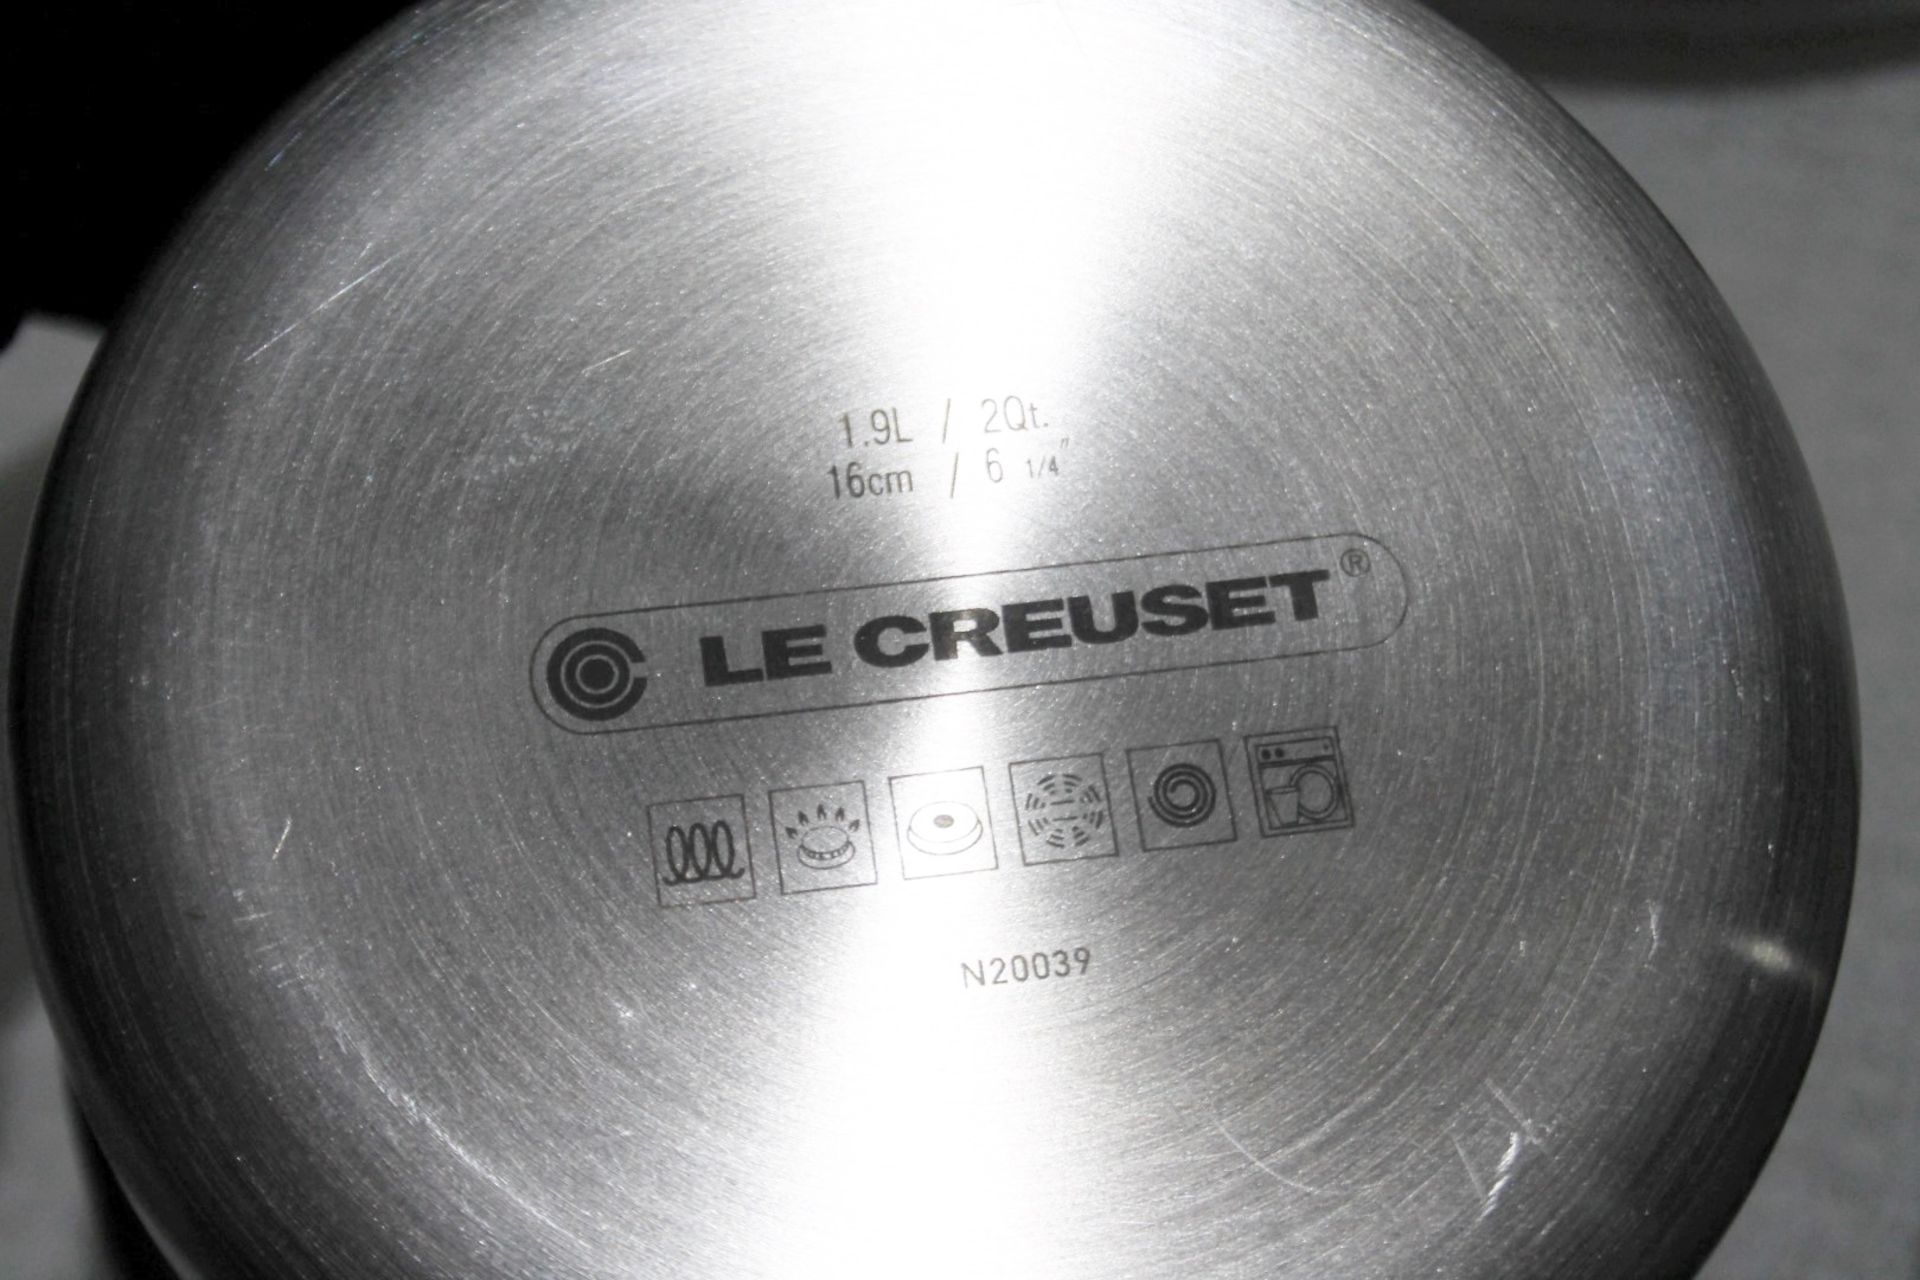 Set Of 3 x LE CREUSET Le Creuset 3-Ply Stainless Steel 3 Piece Saucepan Set - Original RRP £385.00 - - Image 7 of 12